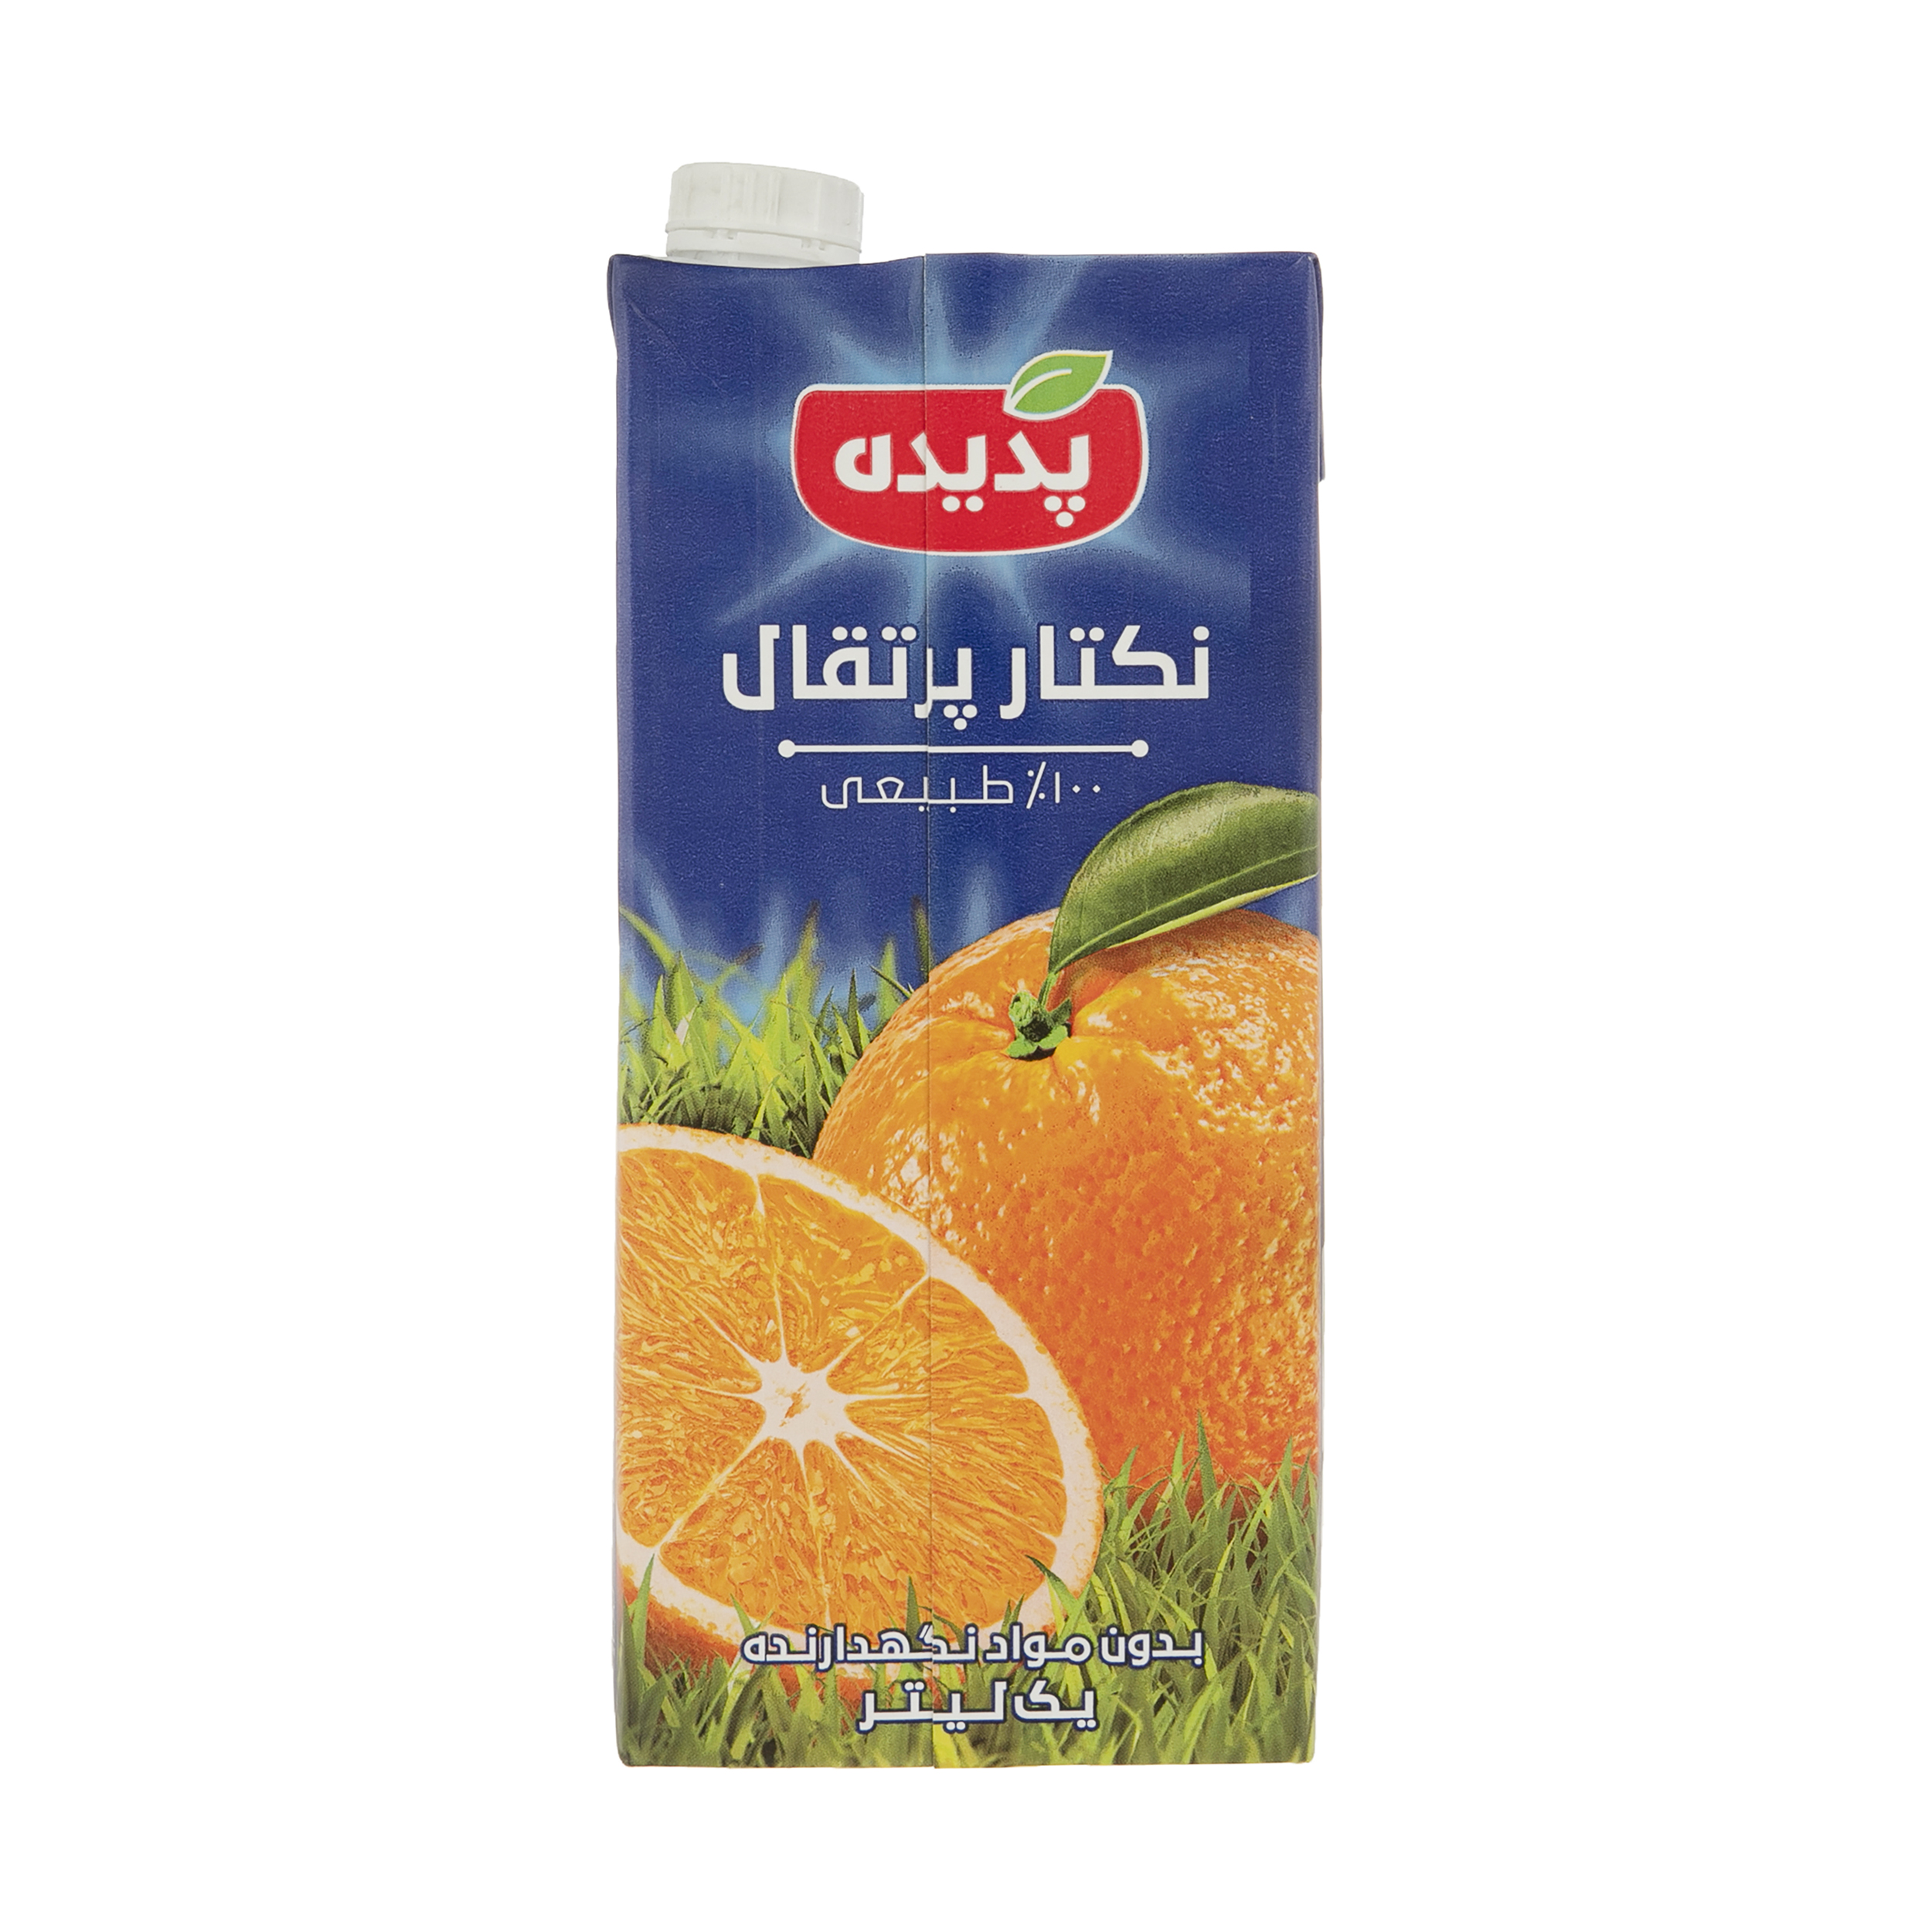 آبمیوه پدیده با طعم پرتقال - 1 لیتر